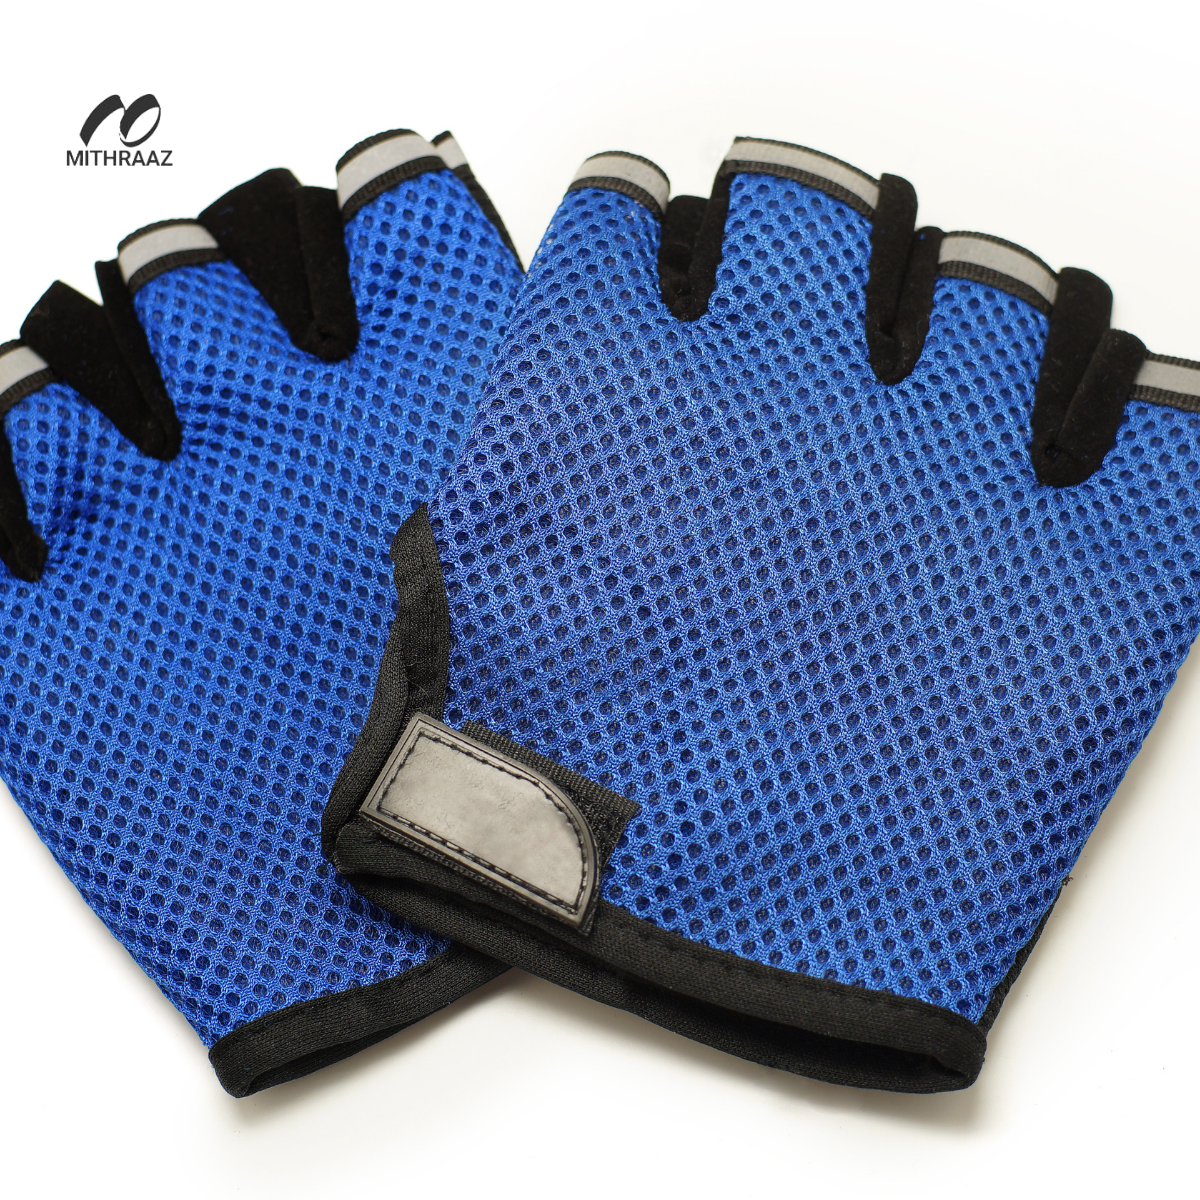 Mithraaz Cycling Gloves